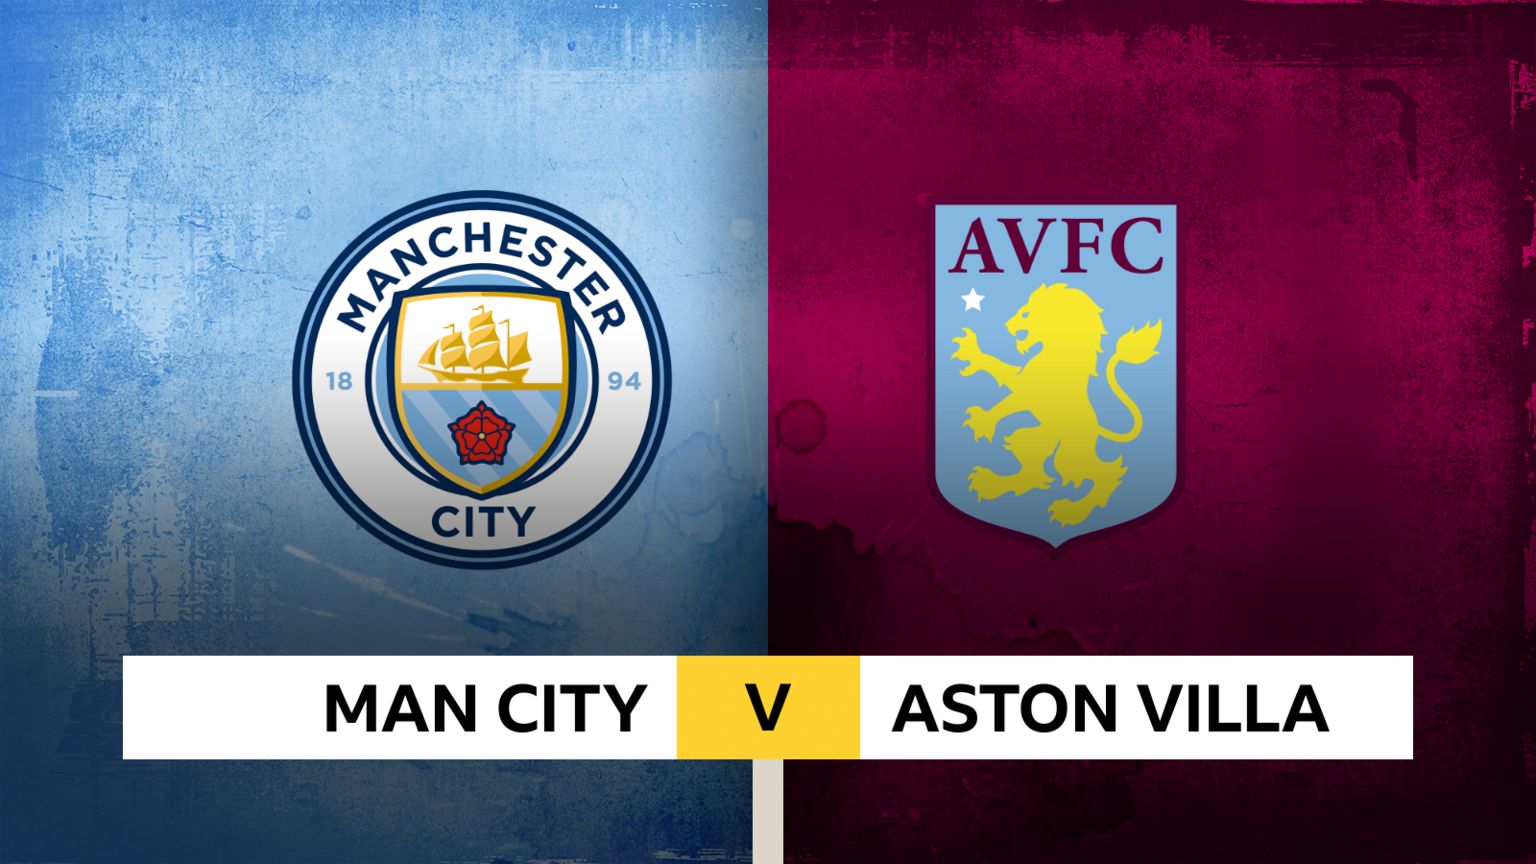 Follow Man City v Aston Villa live